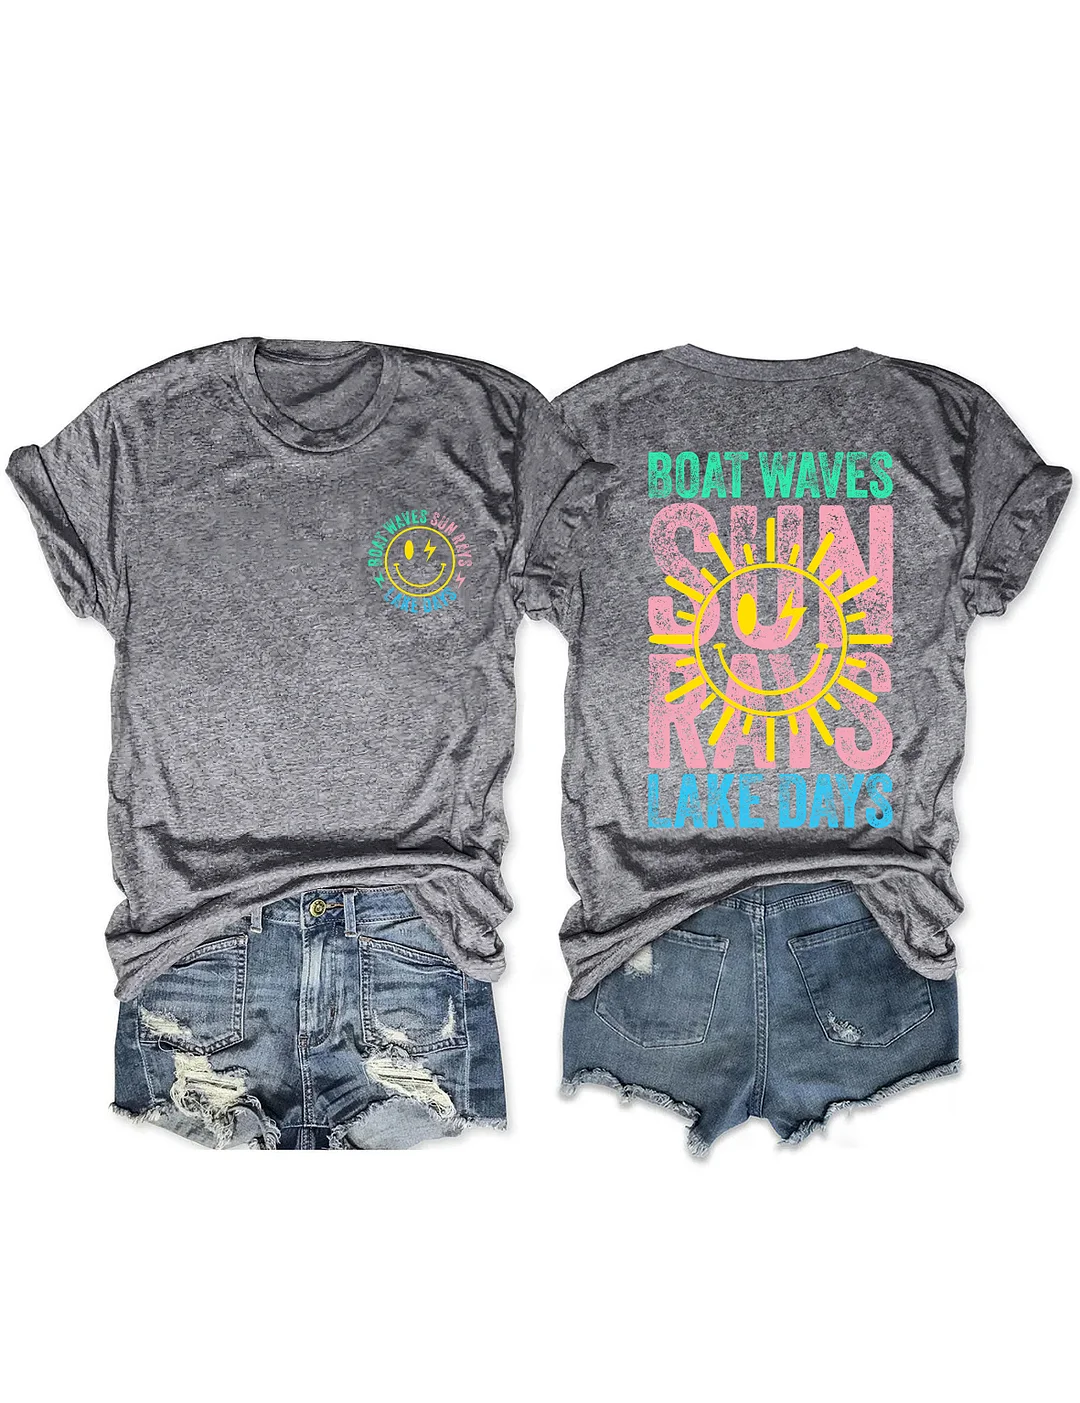 Boat Waves Sun Rays Lake Days T-shirt